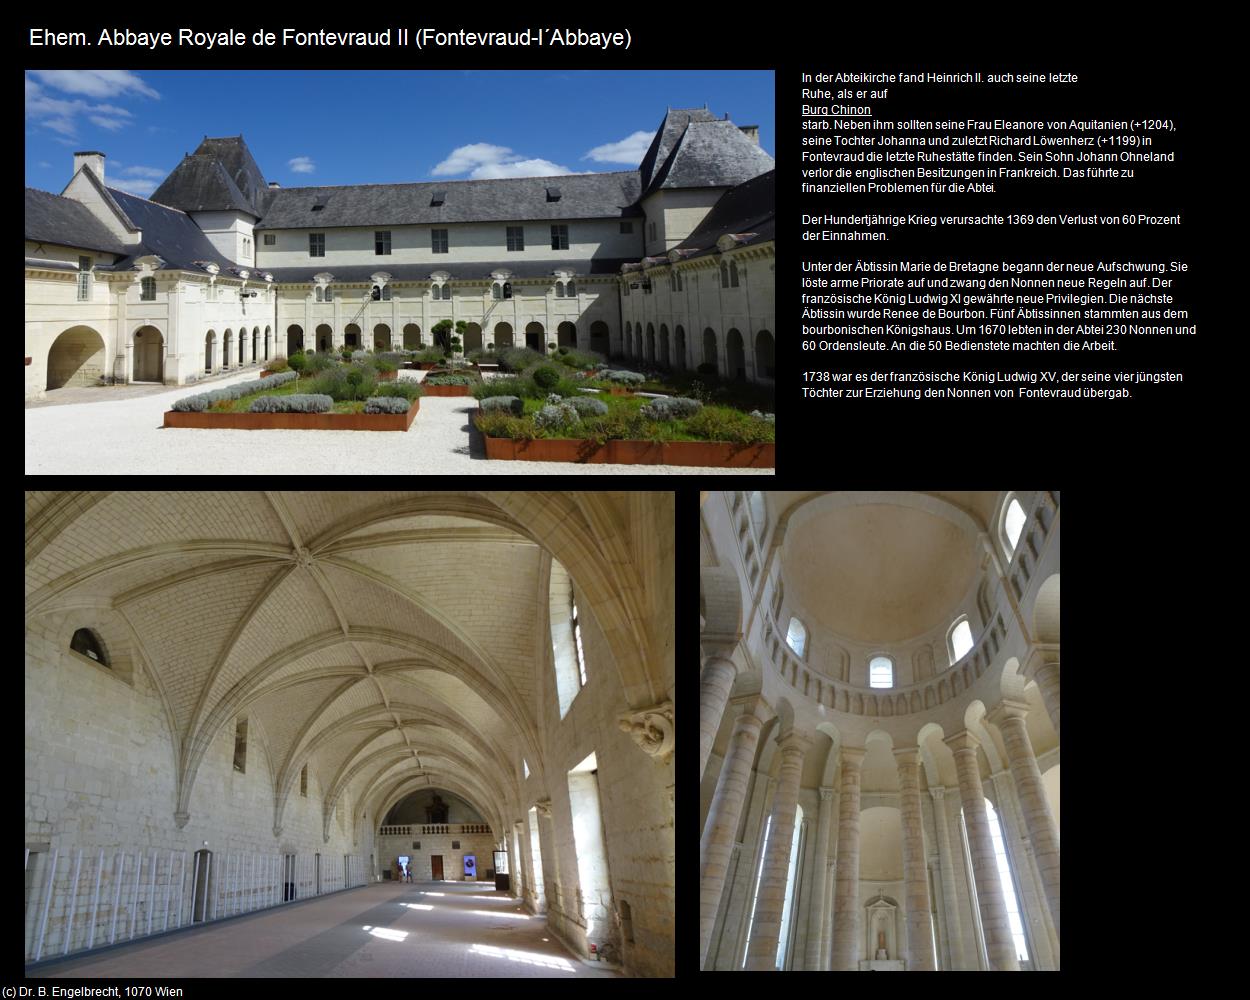 Ehem. Abbaye Royale de Fontevraud II (Fontevraud-l‘Abbaye (FR-PDL)) in Kulturatlas-FRANKREICH(c)B.Engelbrecht